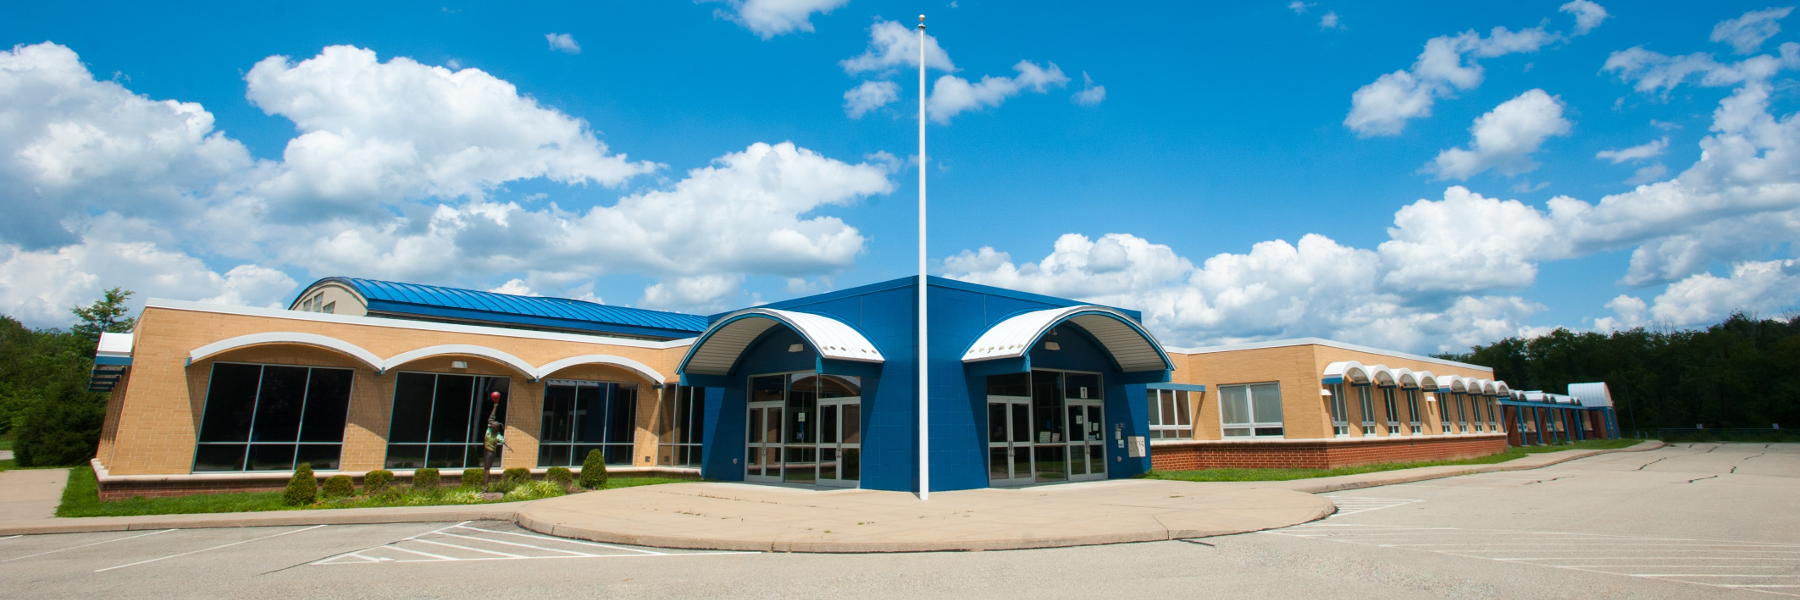 South Buffalo Elementary School